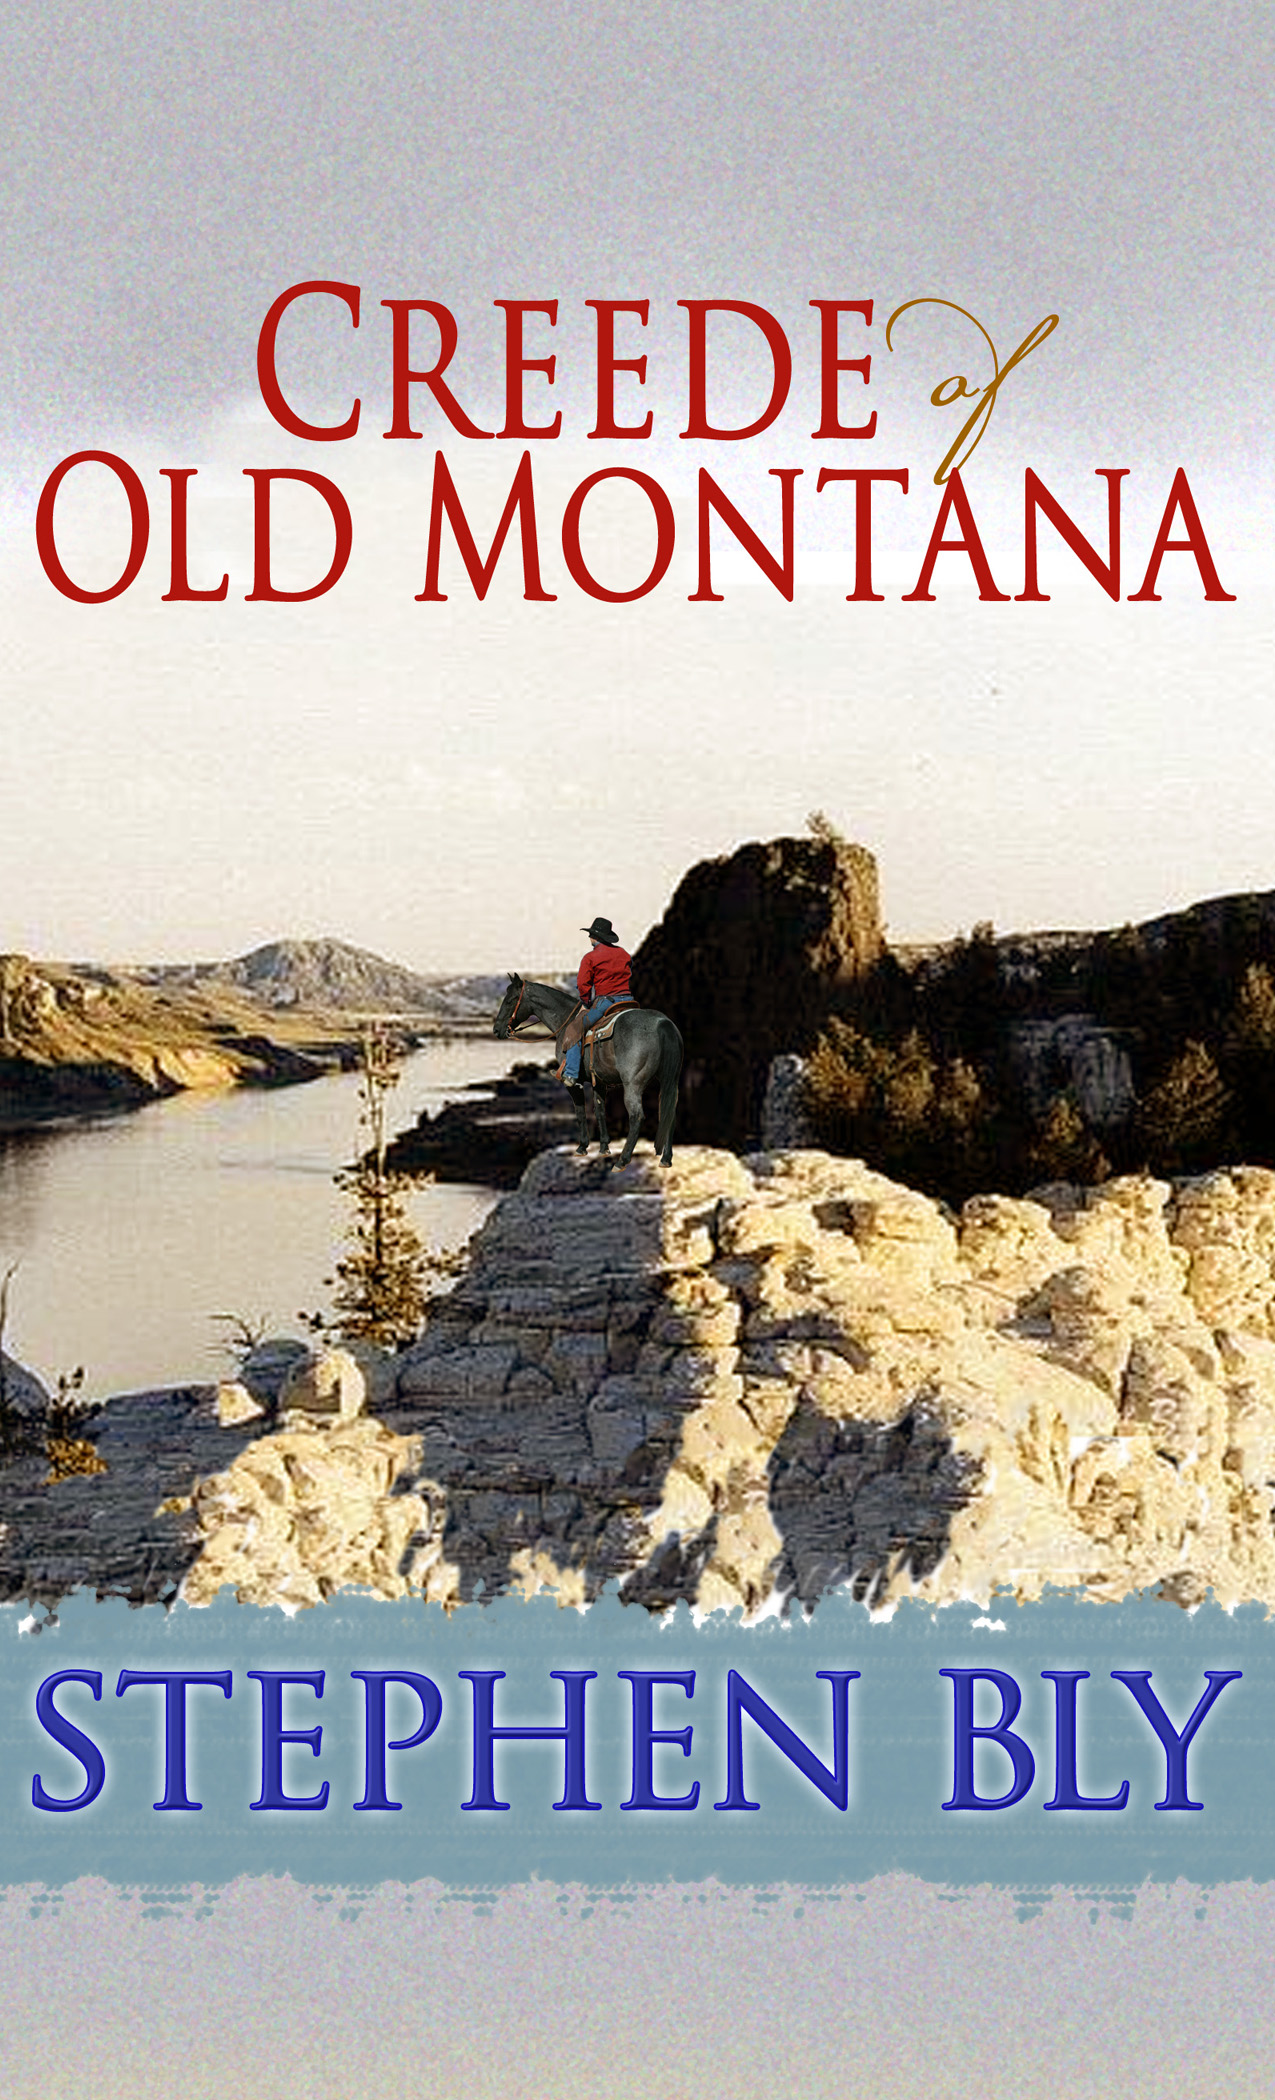 Creede of Old Montana – historical western romance novel